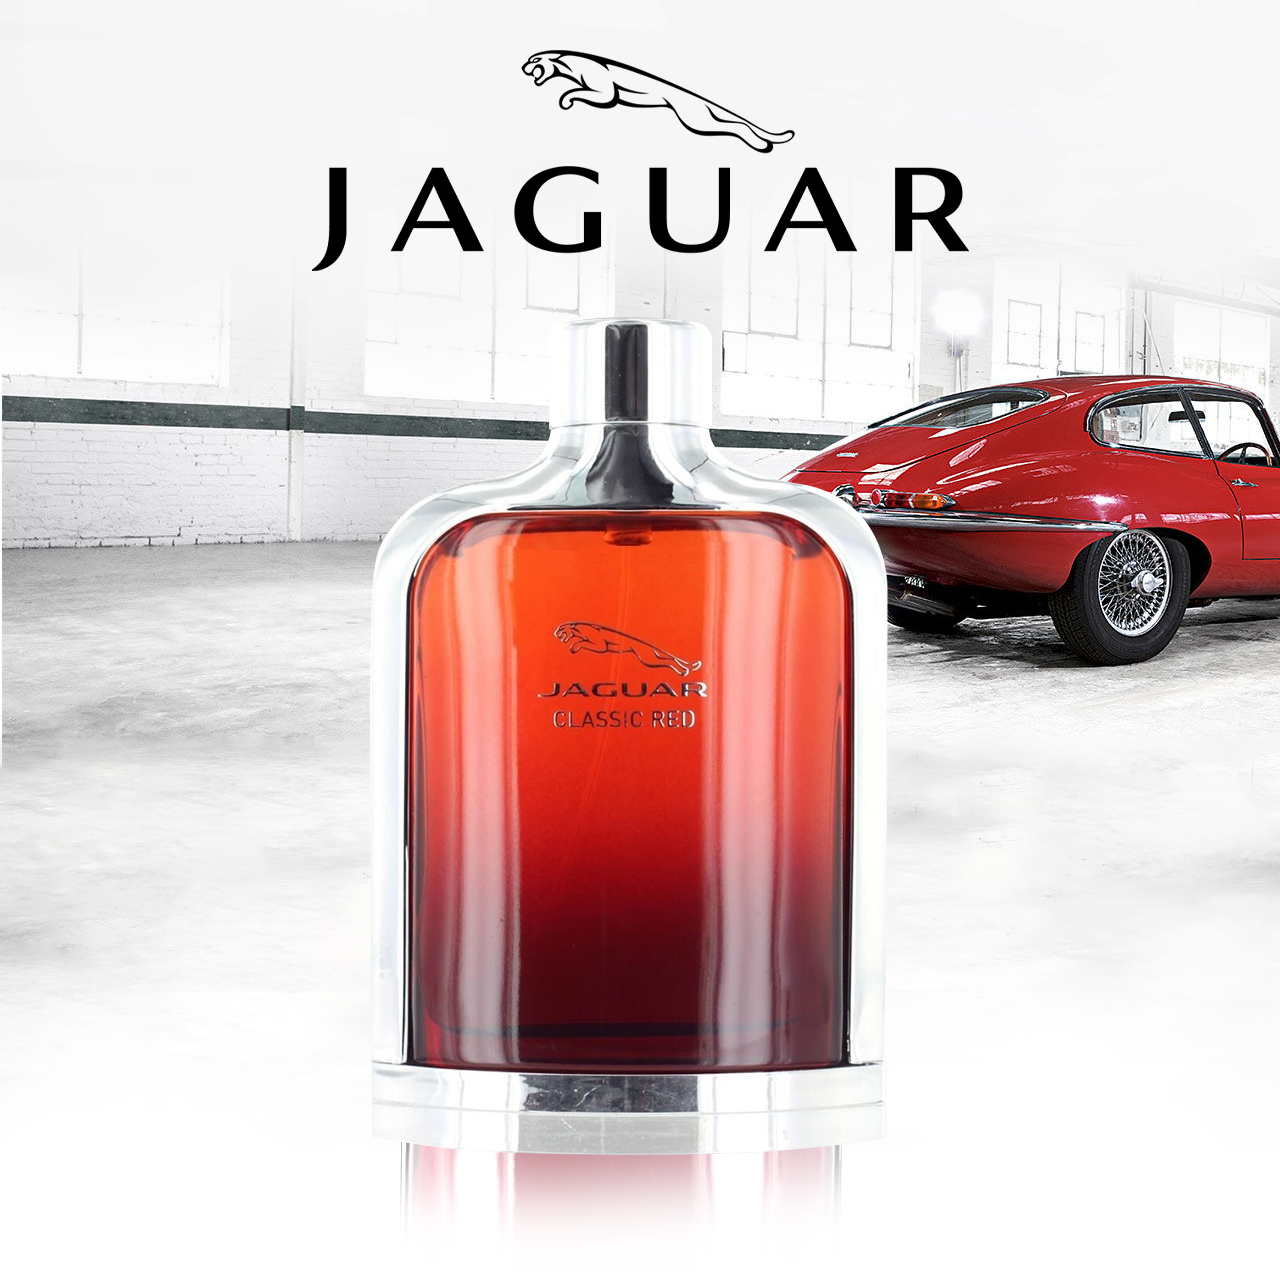 jaguar-sqr-banner